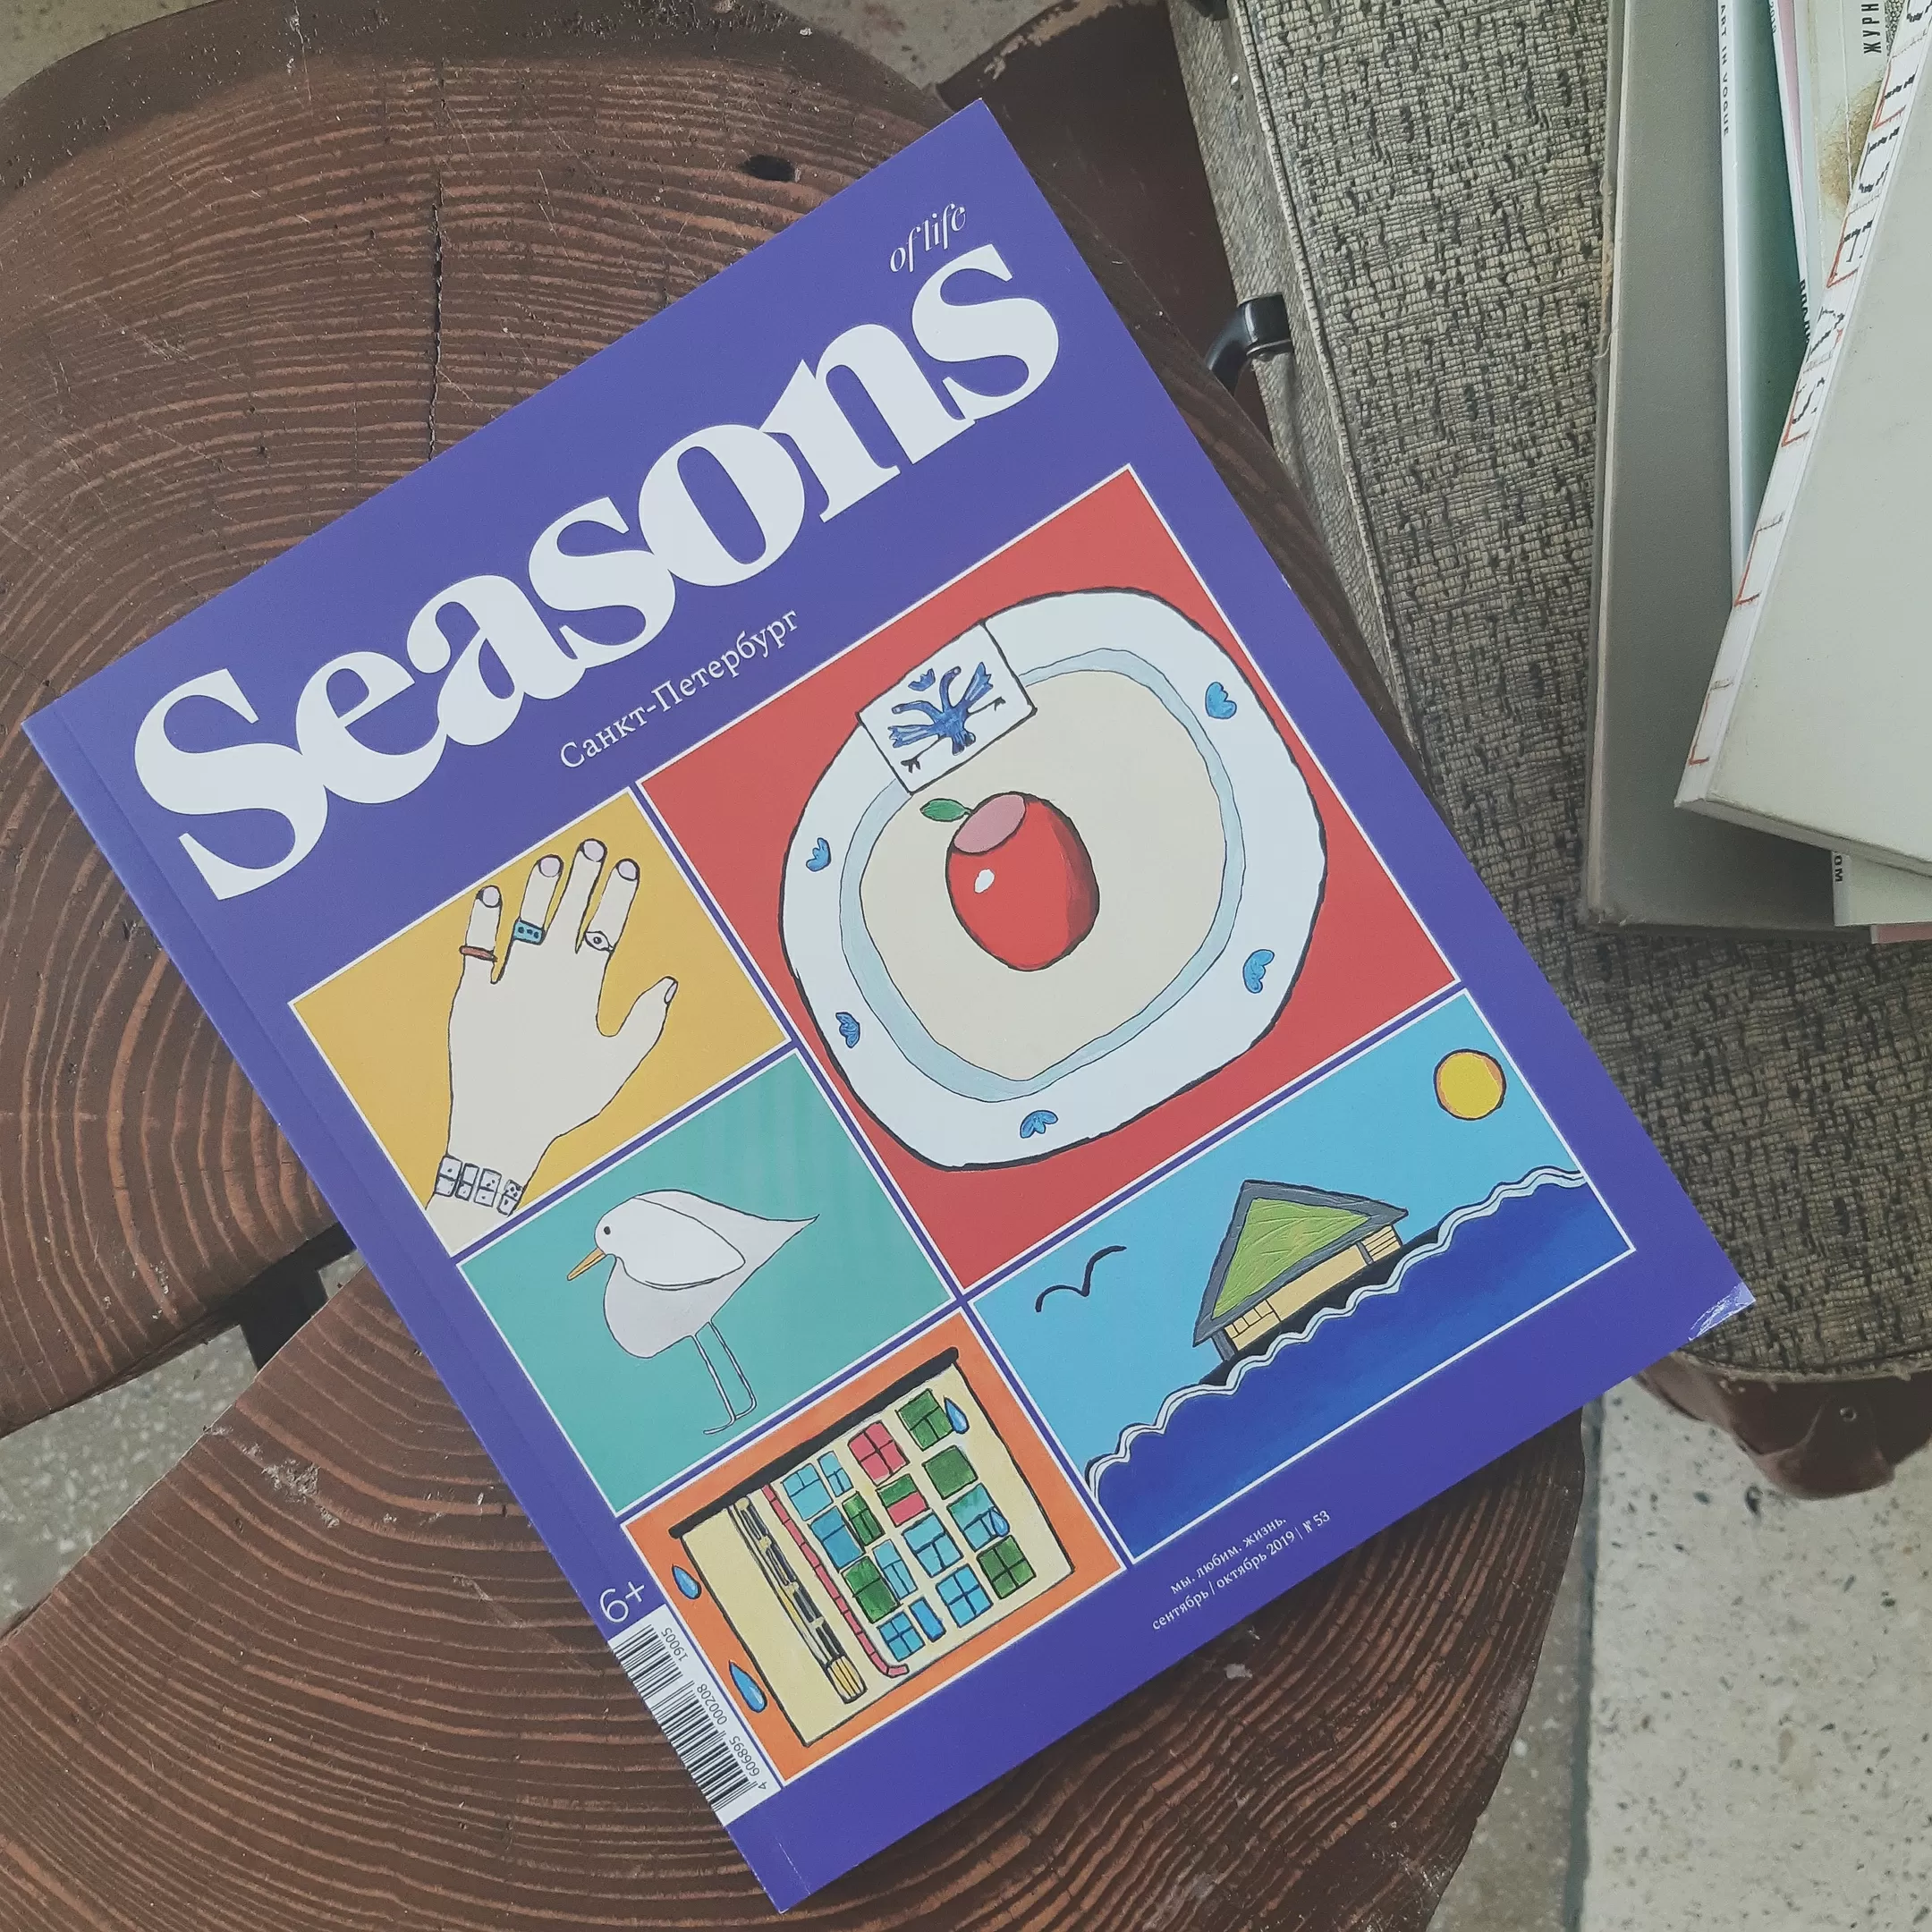 Журнал Seasons of life №53 (сентябрь-октябрь) 2019